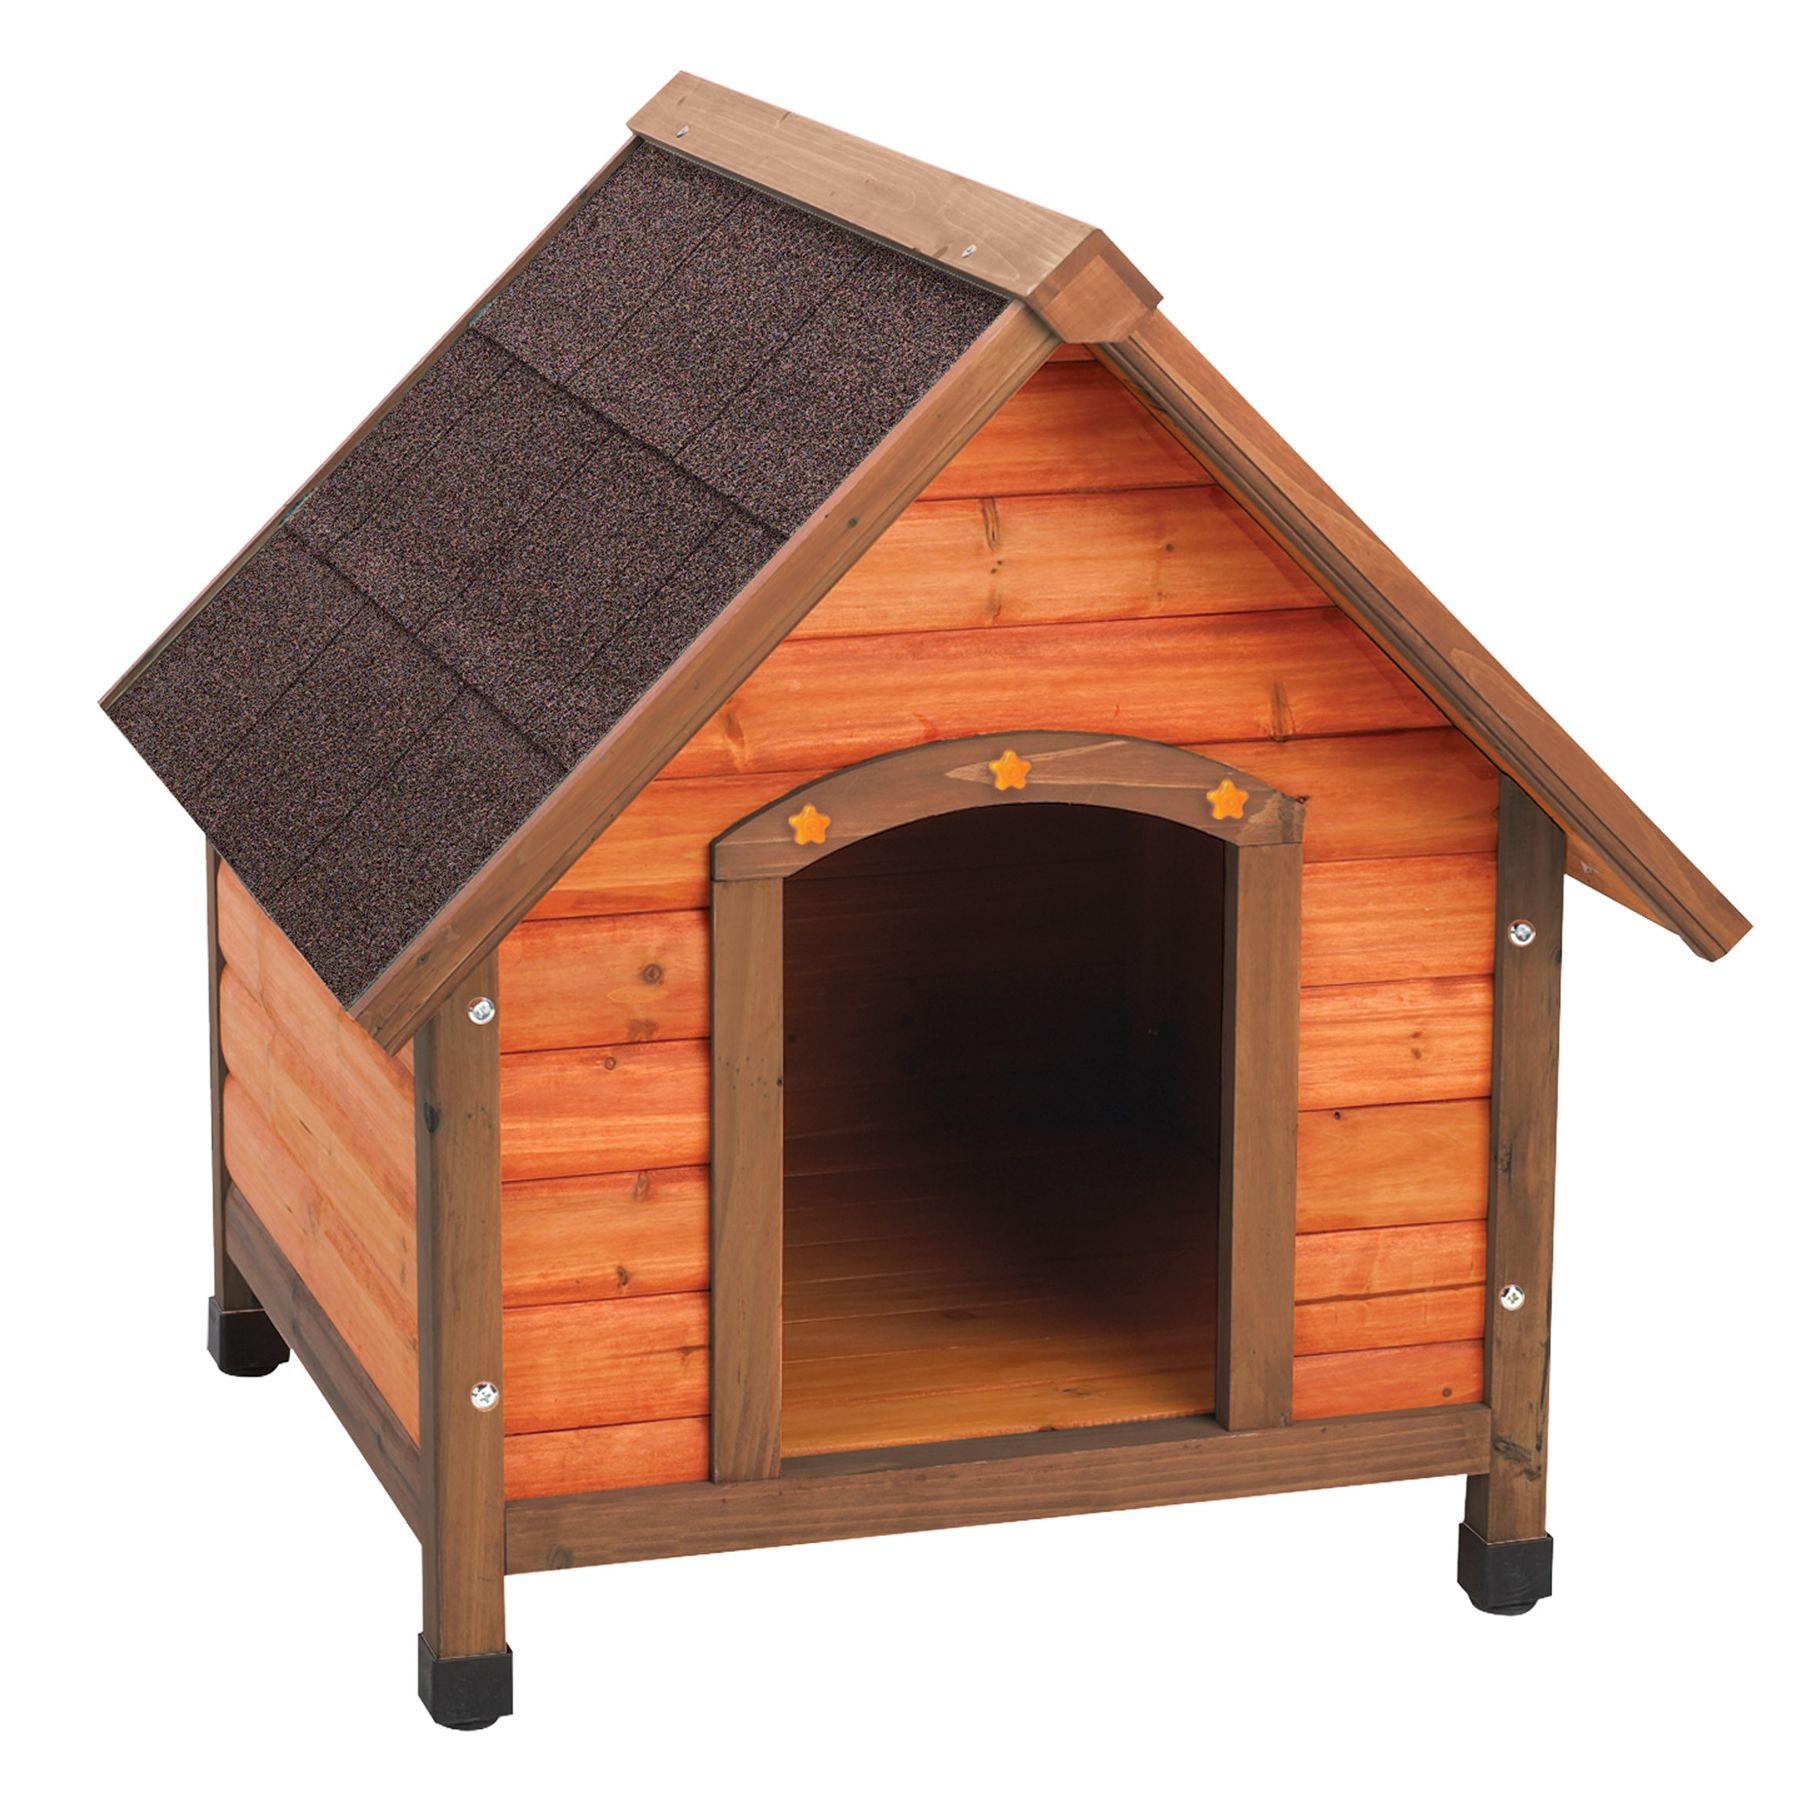 heated dog house petsmart